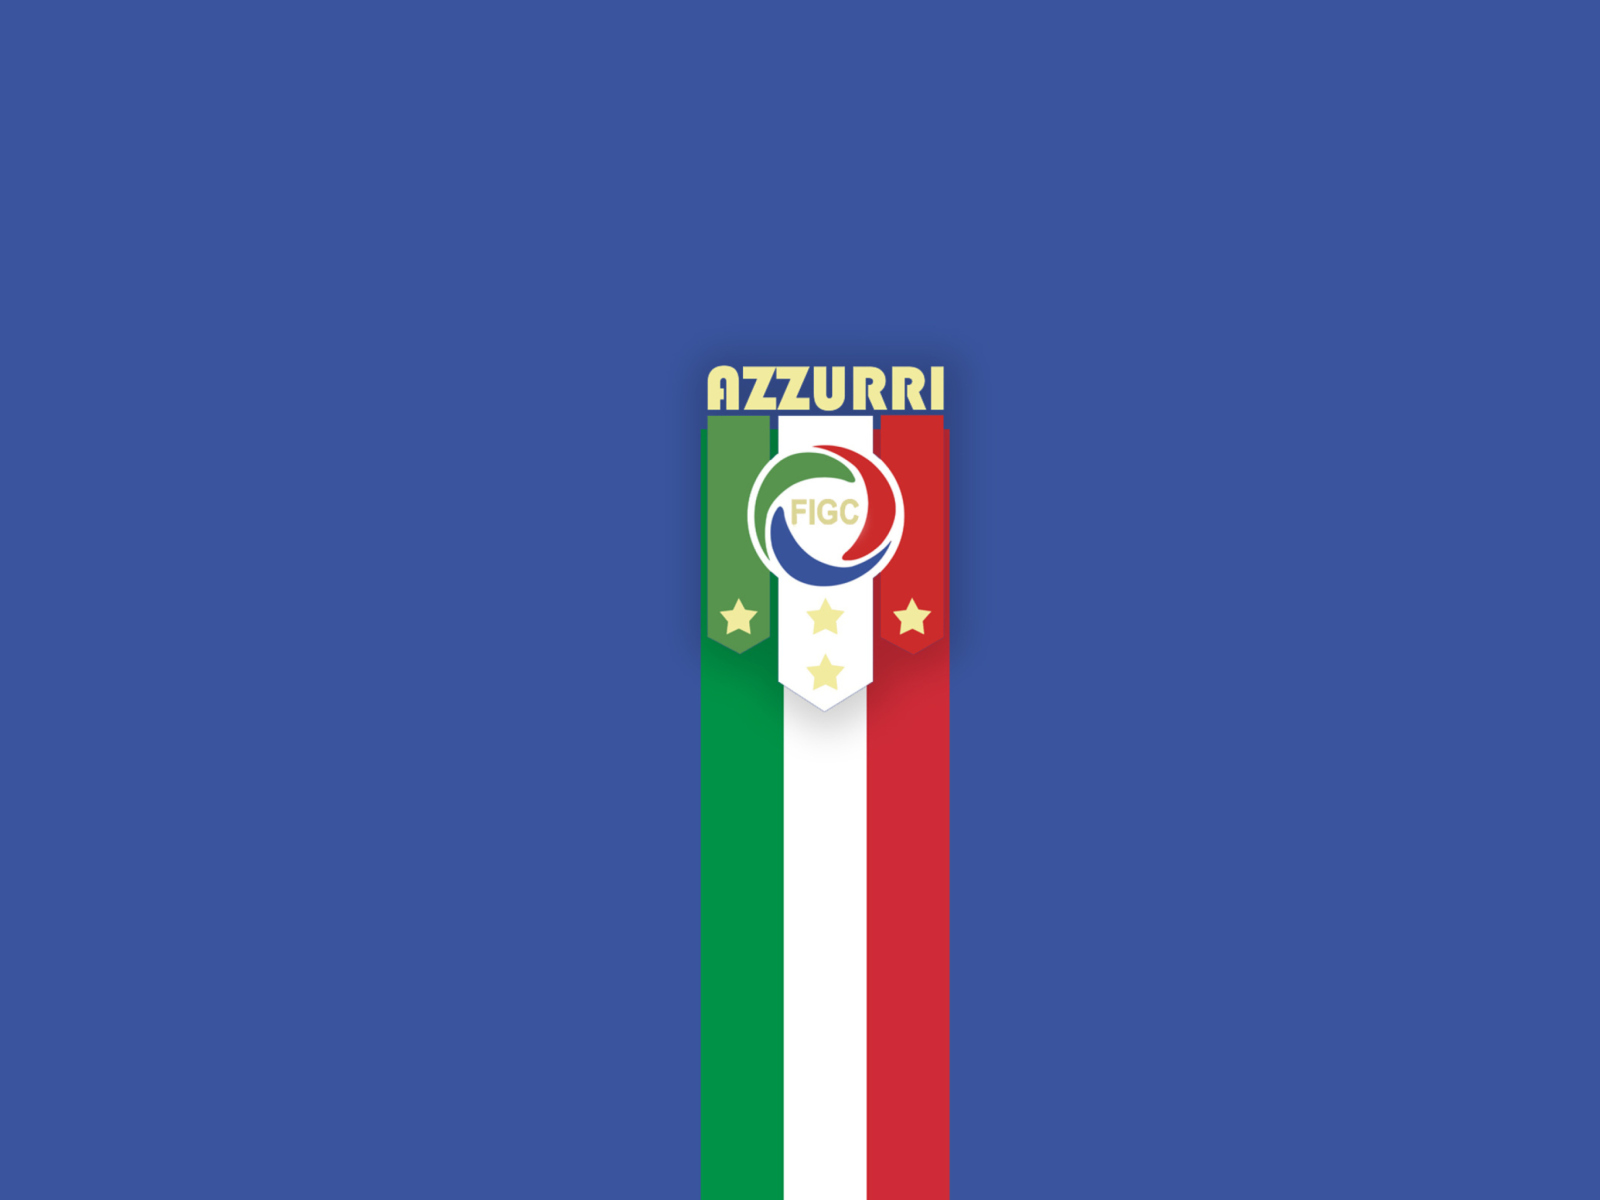 Azzurri - Italy National Team wallpaper 1600x1200